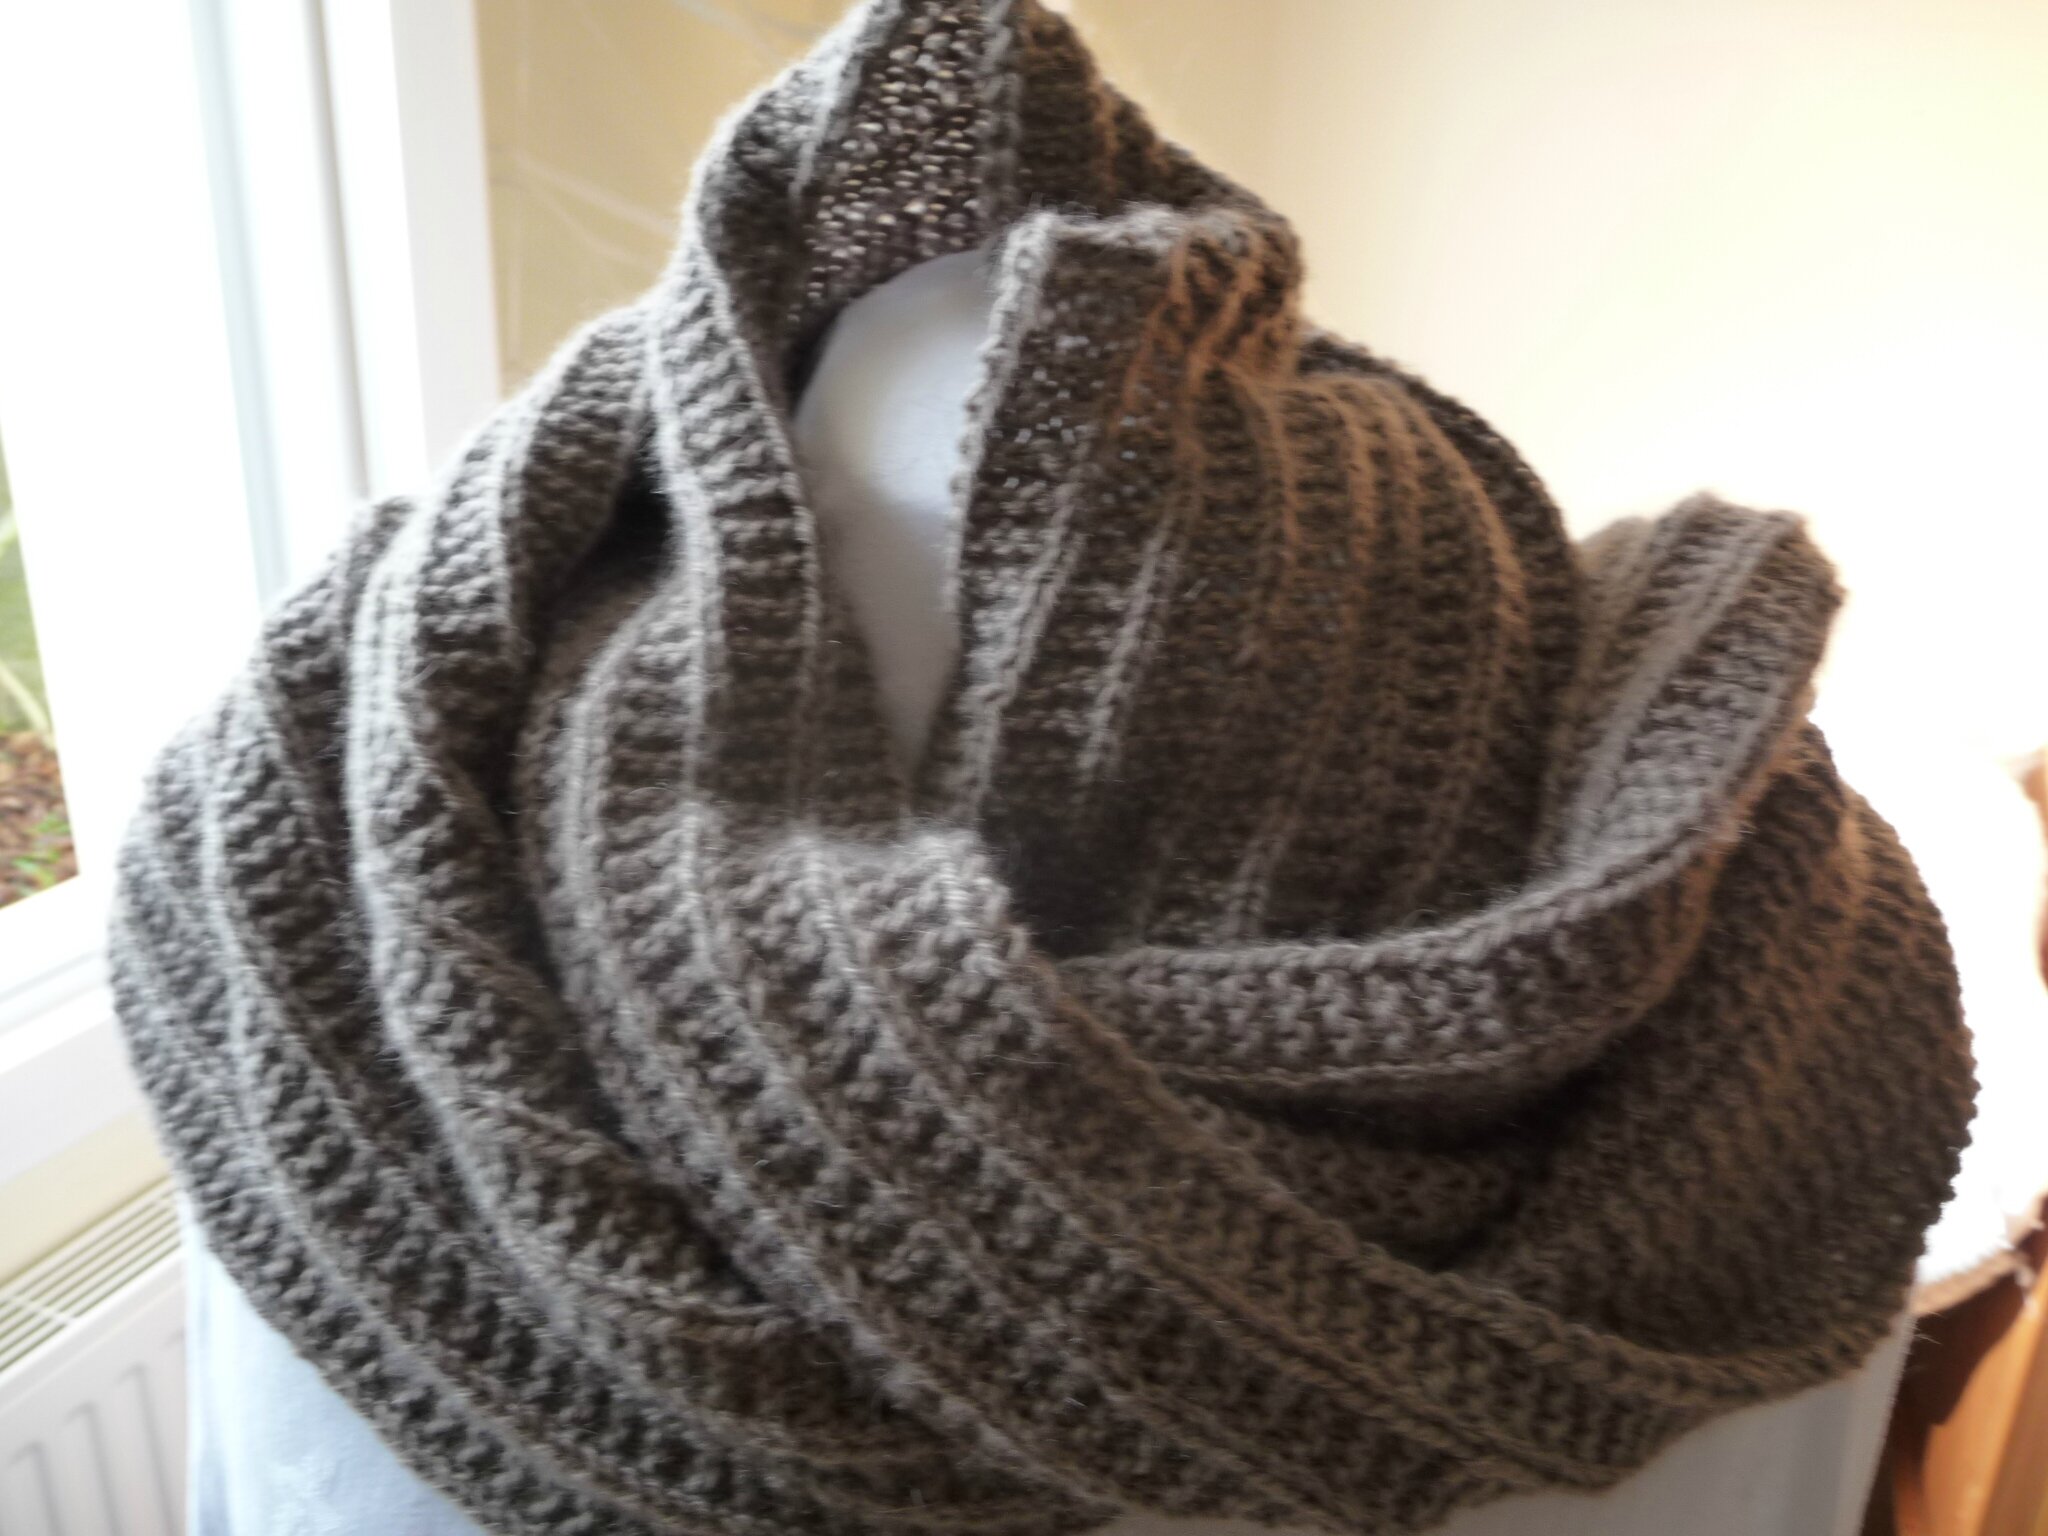 tricoter une echarpe laine fantaisie